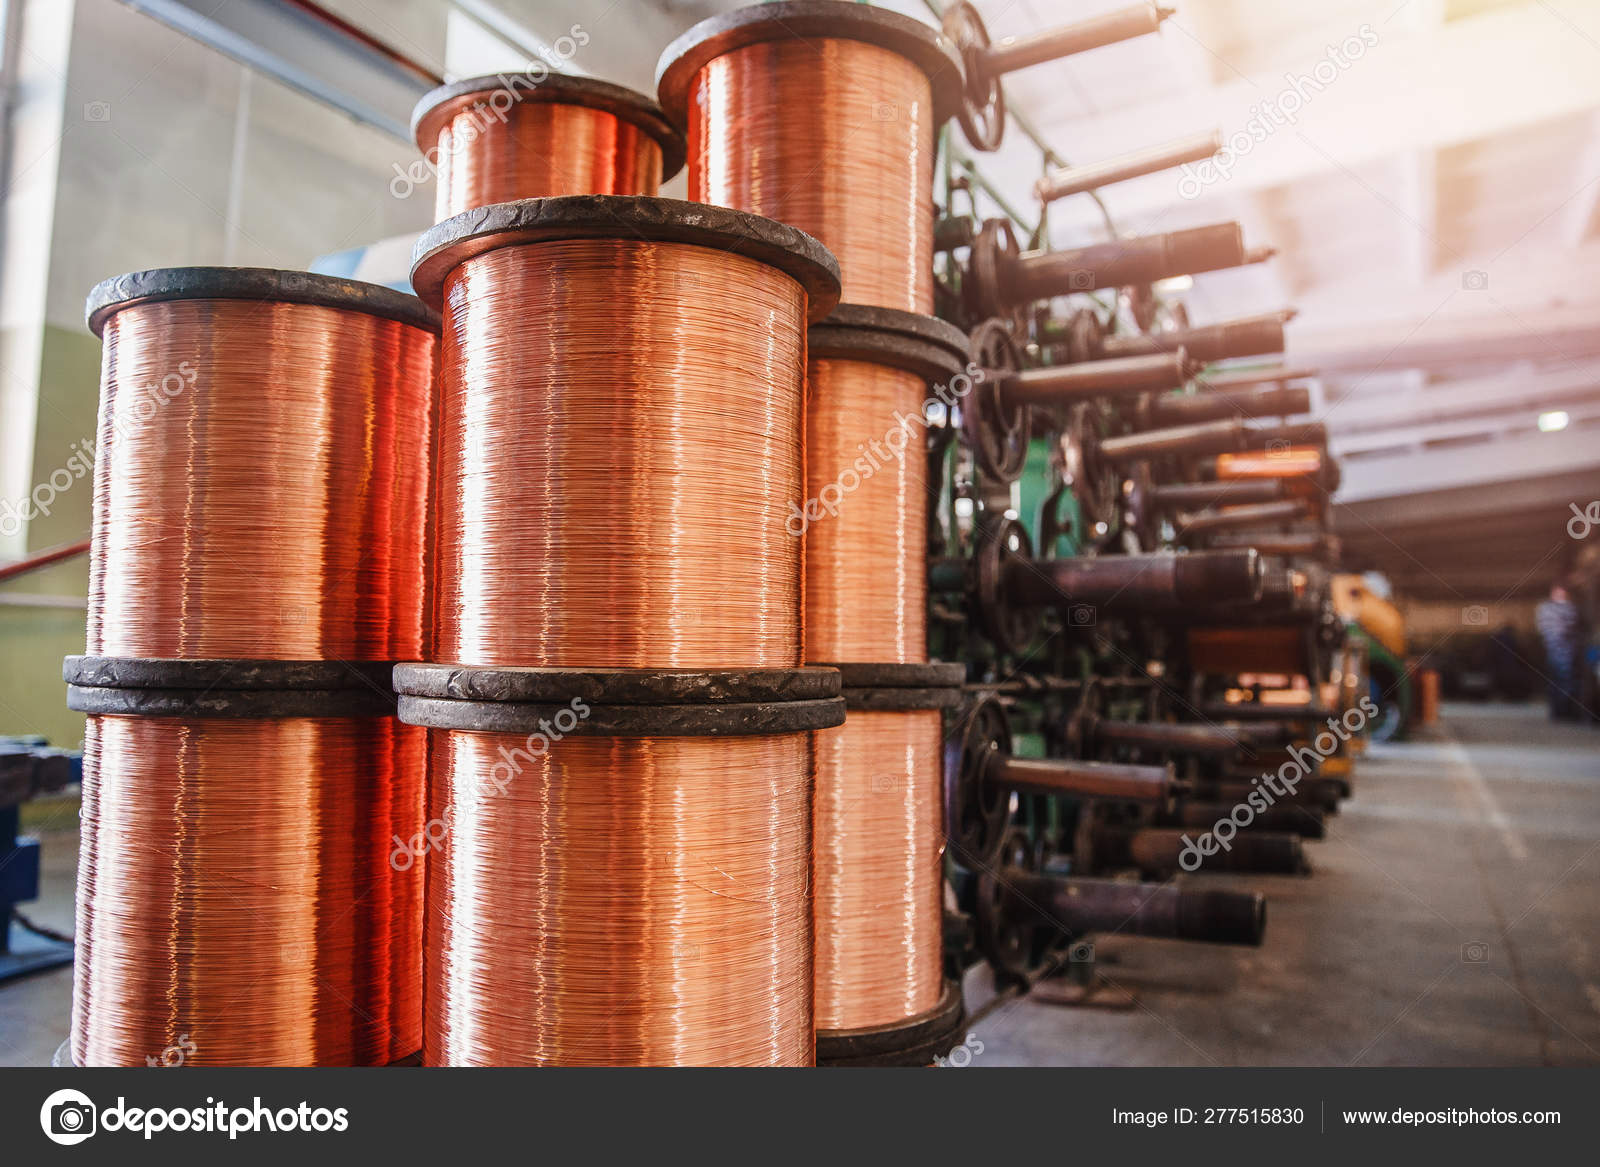 https://st4.depositphotos.com/15237386/27751/i/1600/depositphotos_277515830-stock-photo-production-of-copper-wire-bronze.jpg